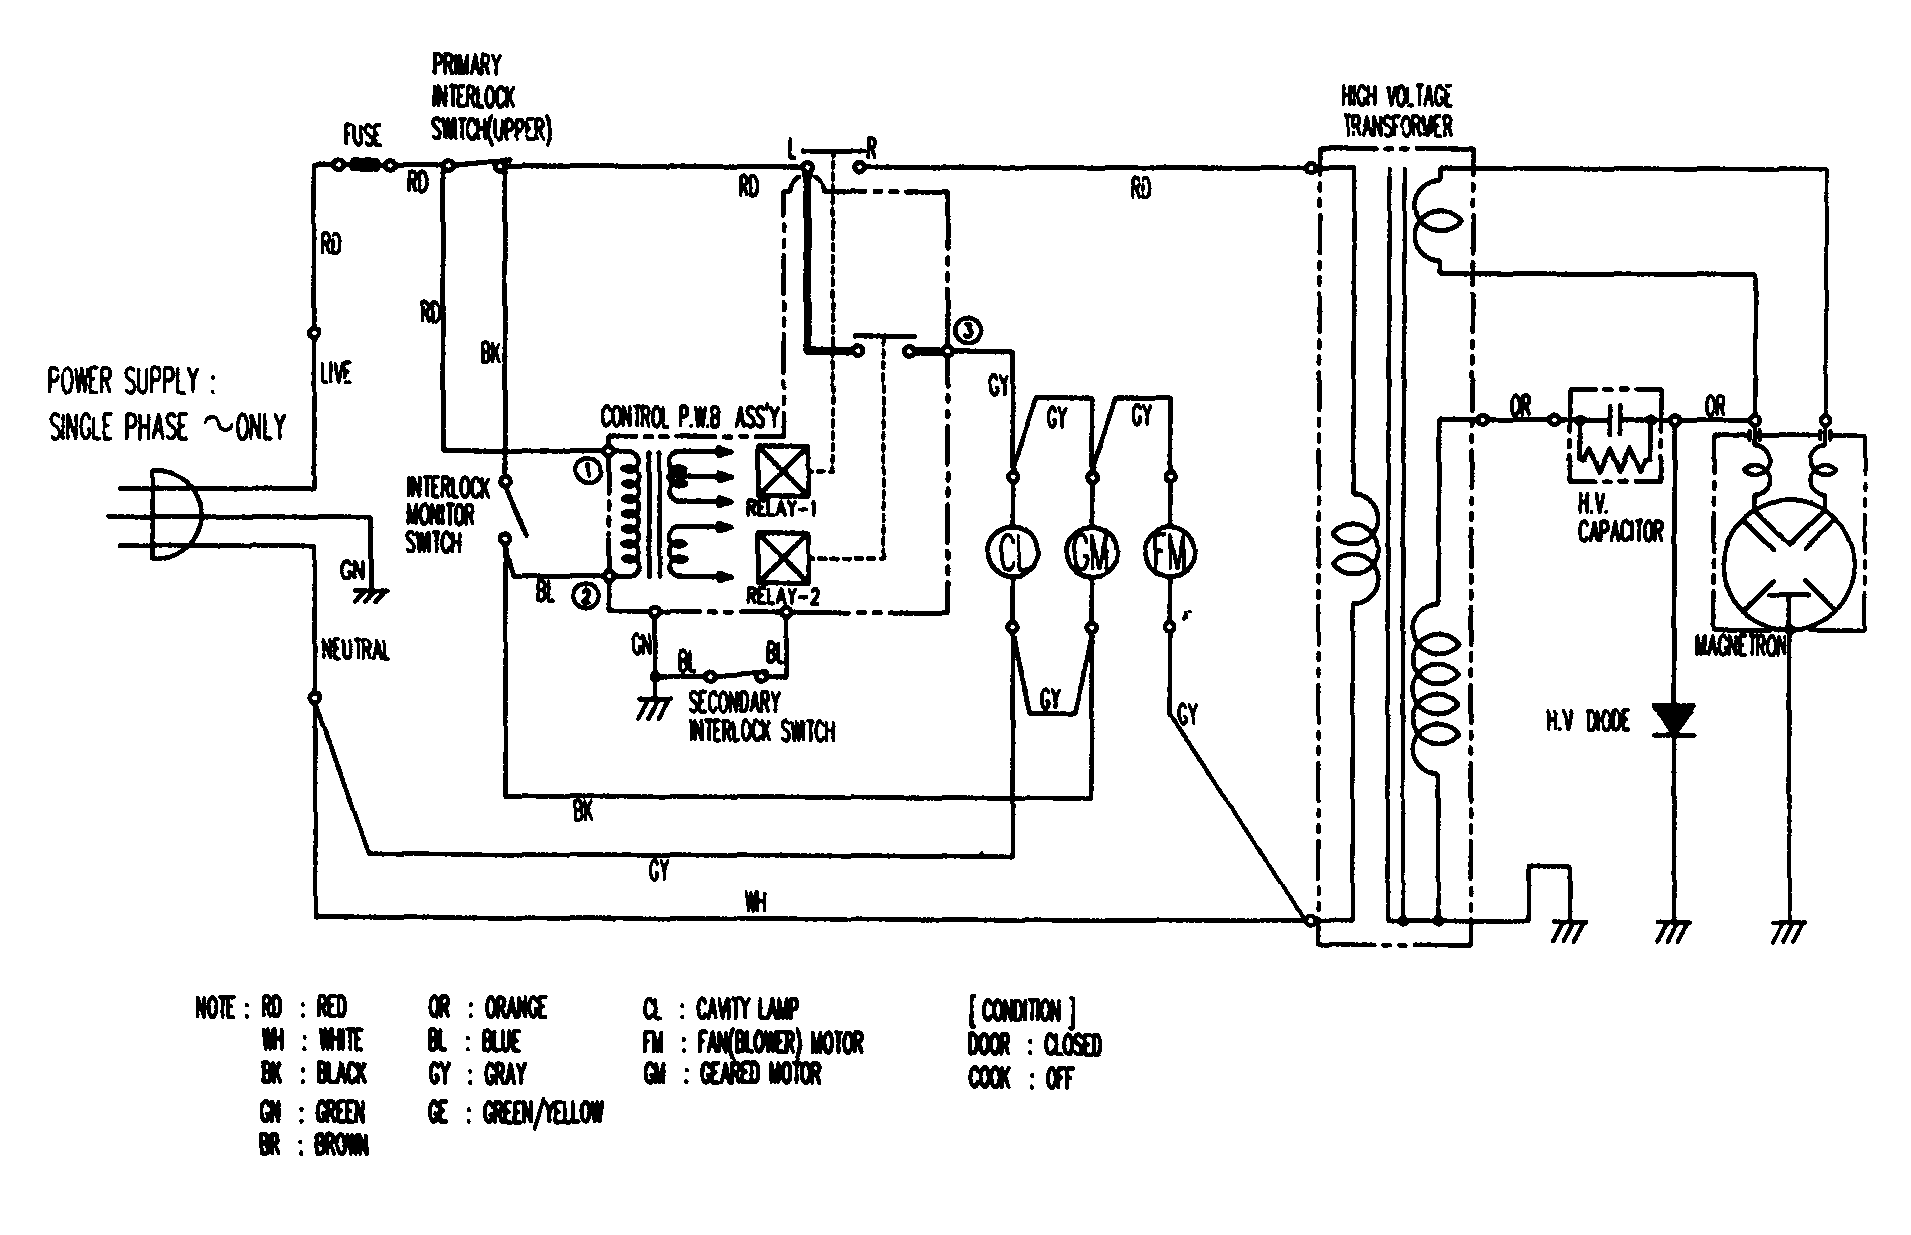 Microwave Oven Electrical Circuit Diagram - Circuit Diagram Images